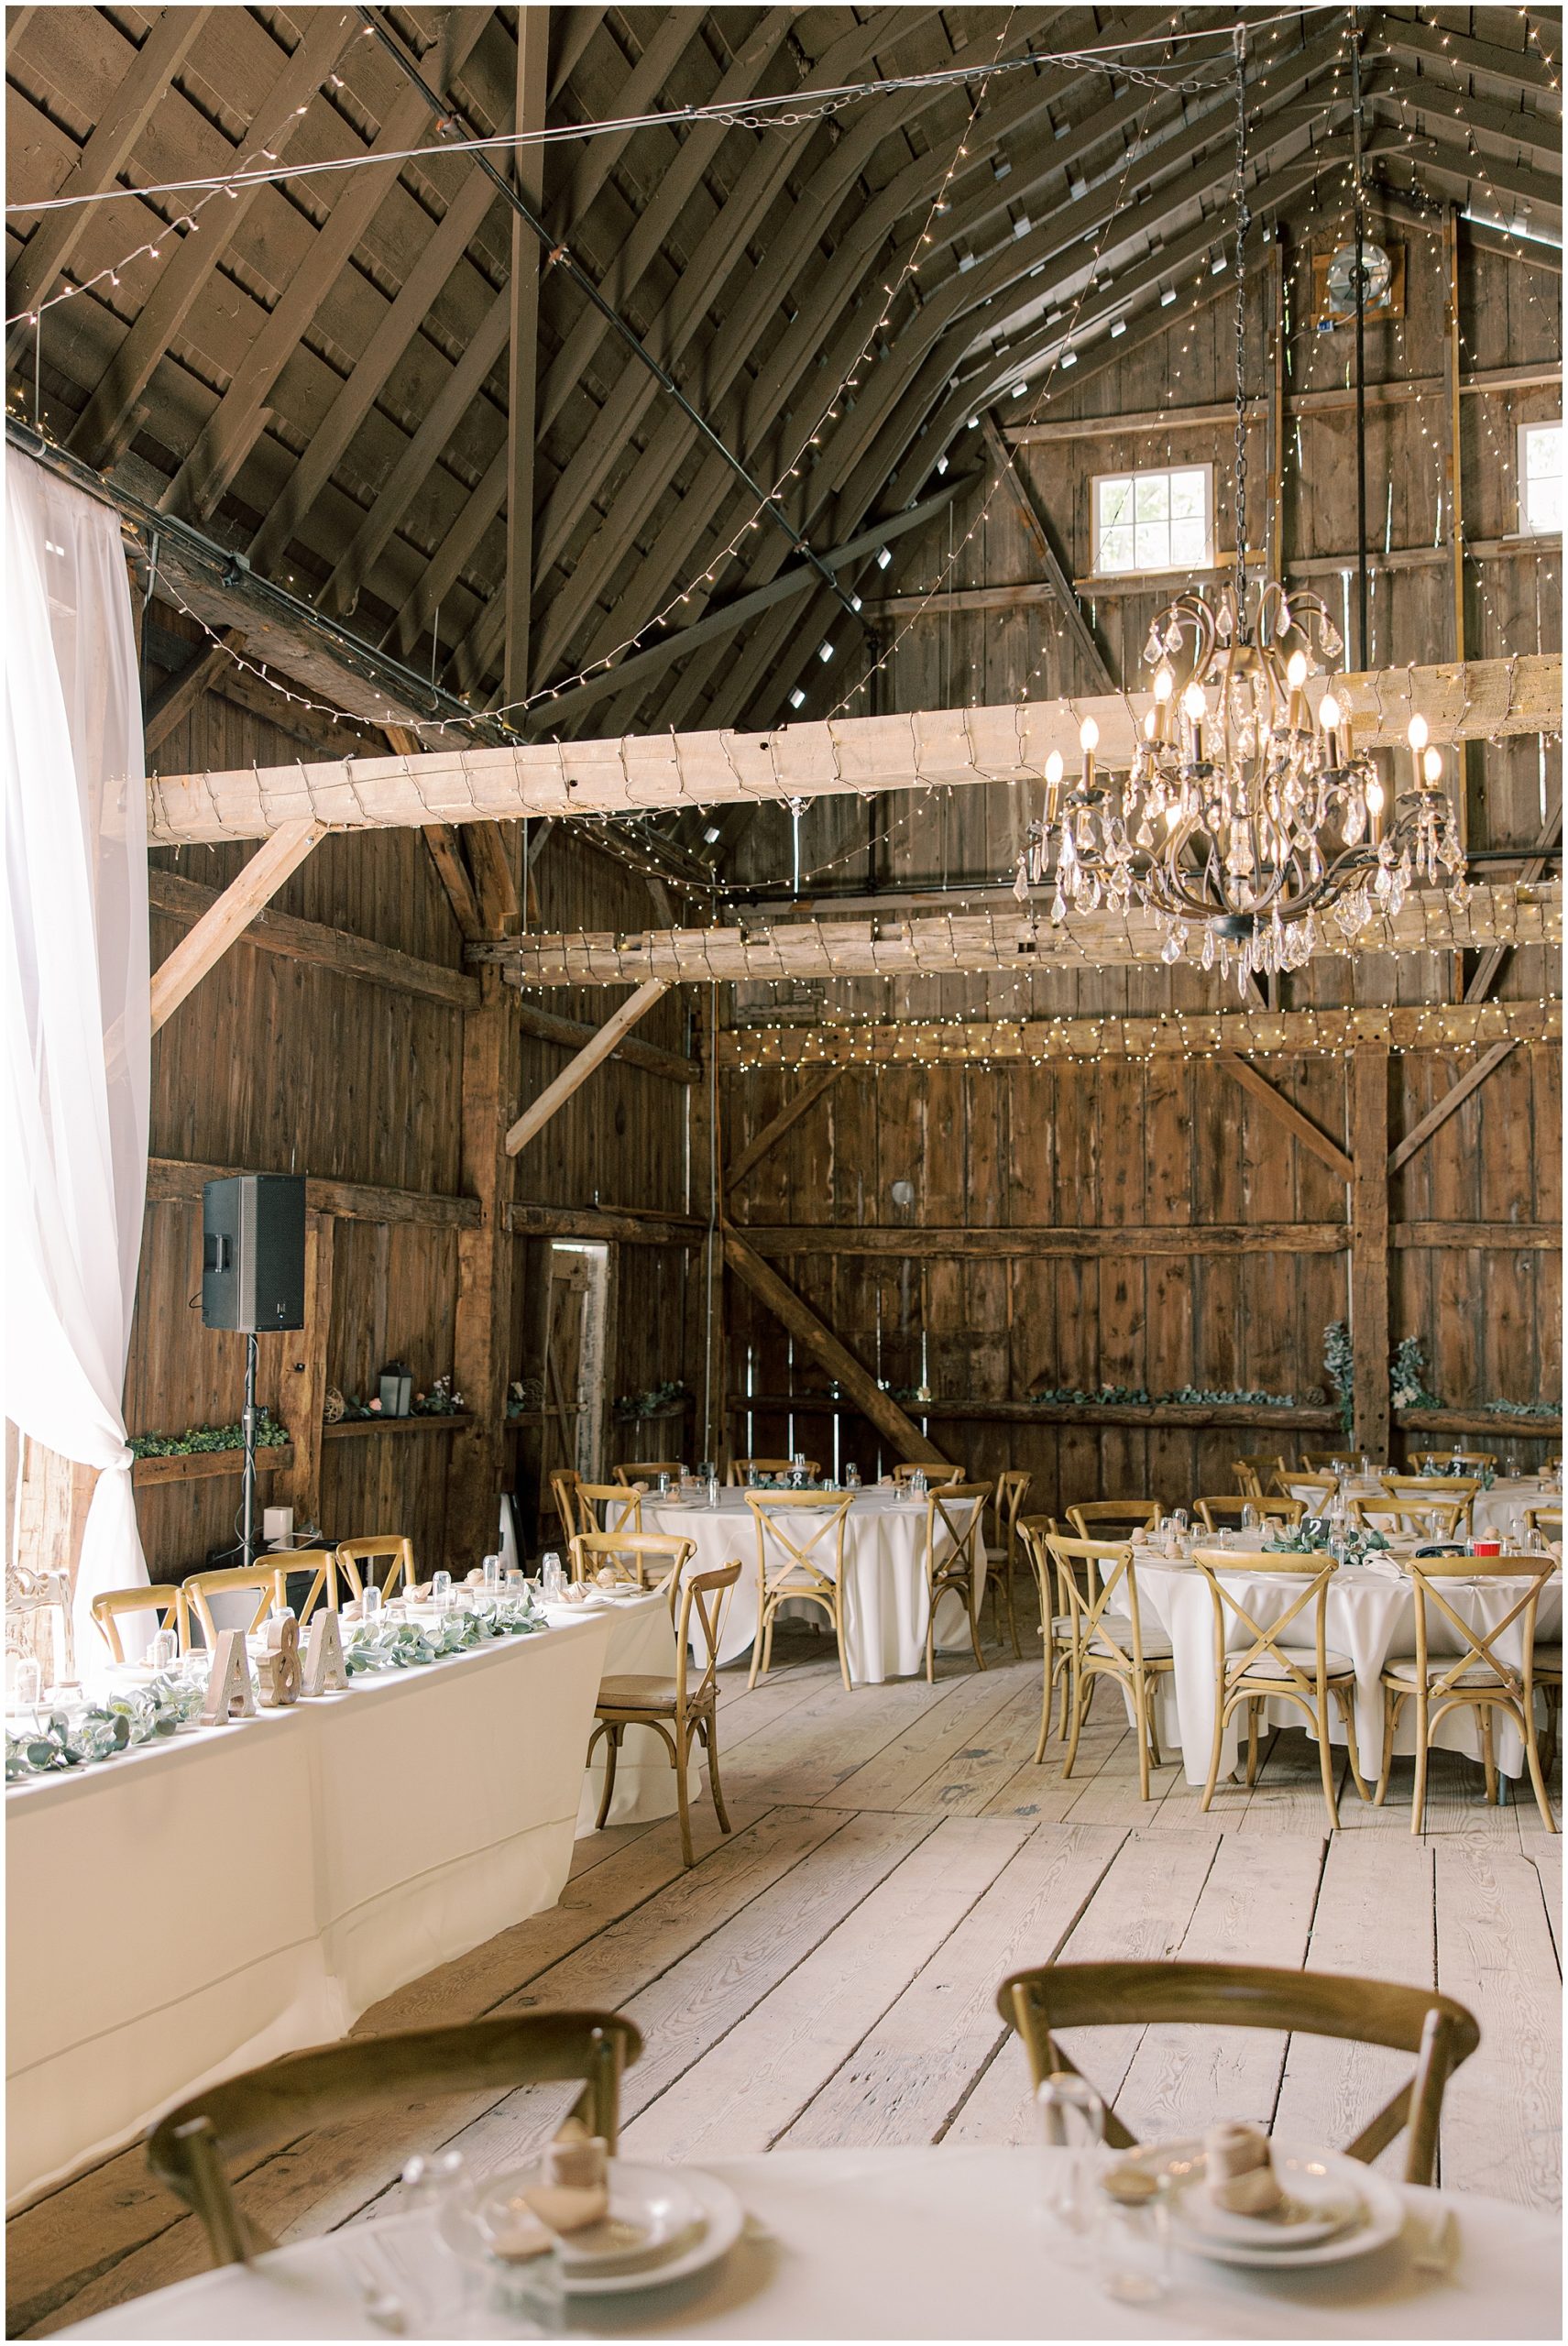 gorgeous indoor barn wedding venue with Chandelier